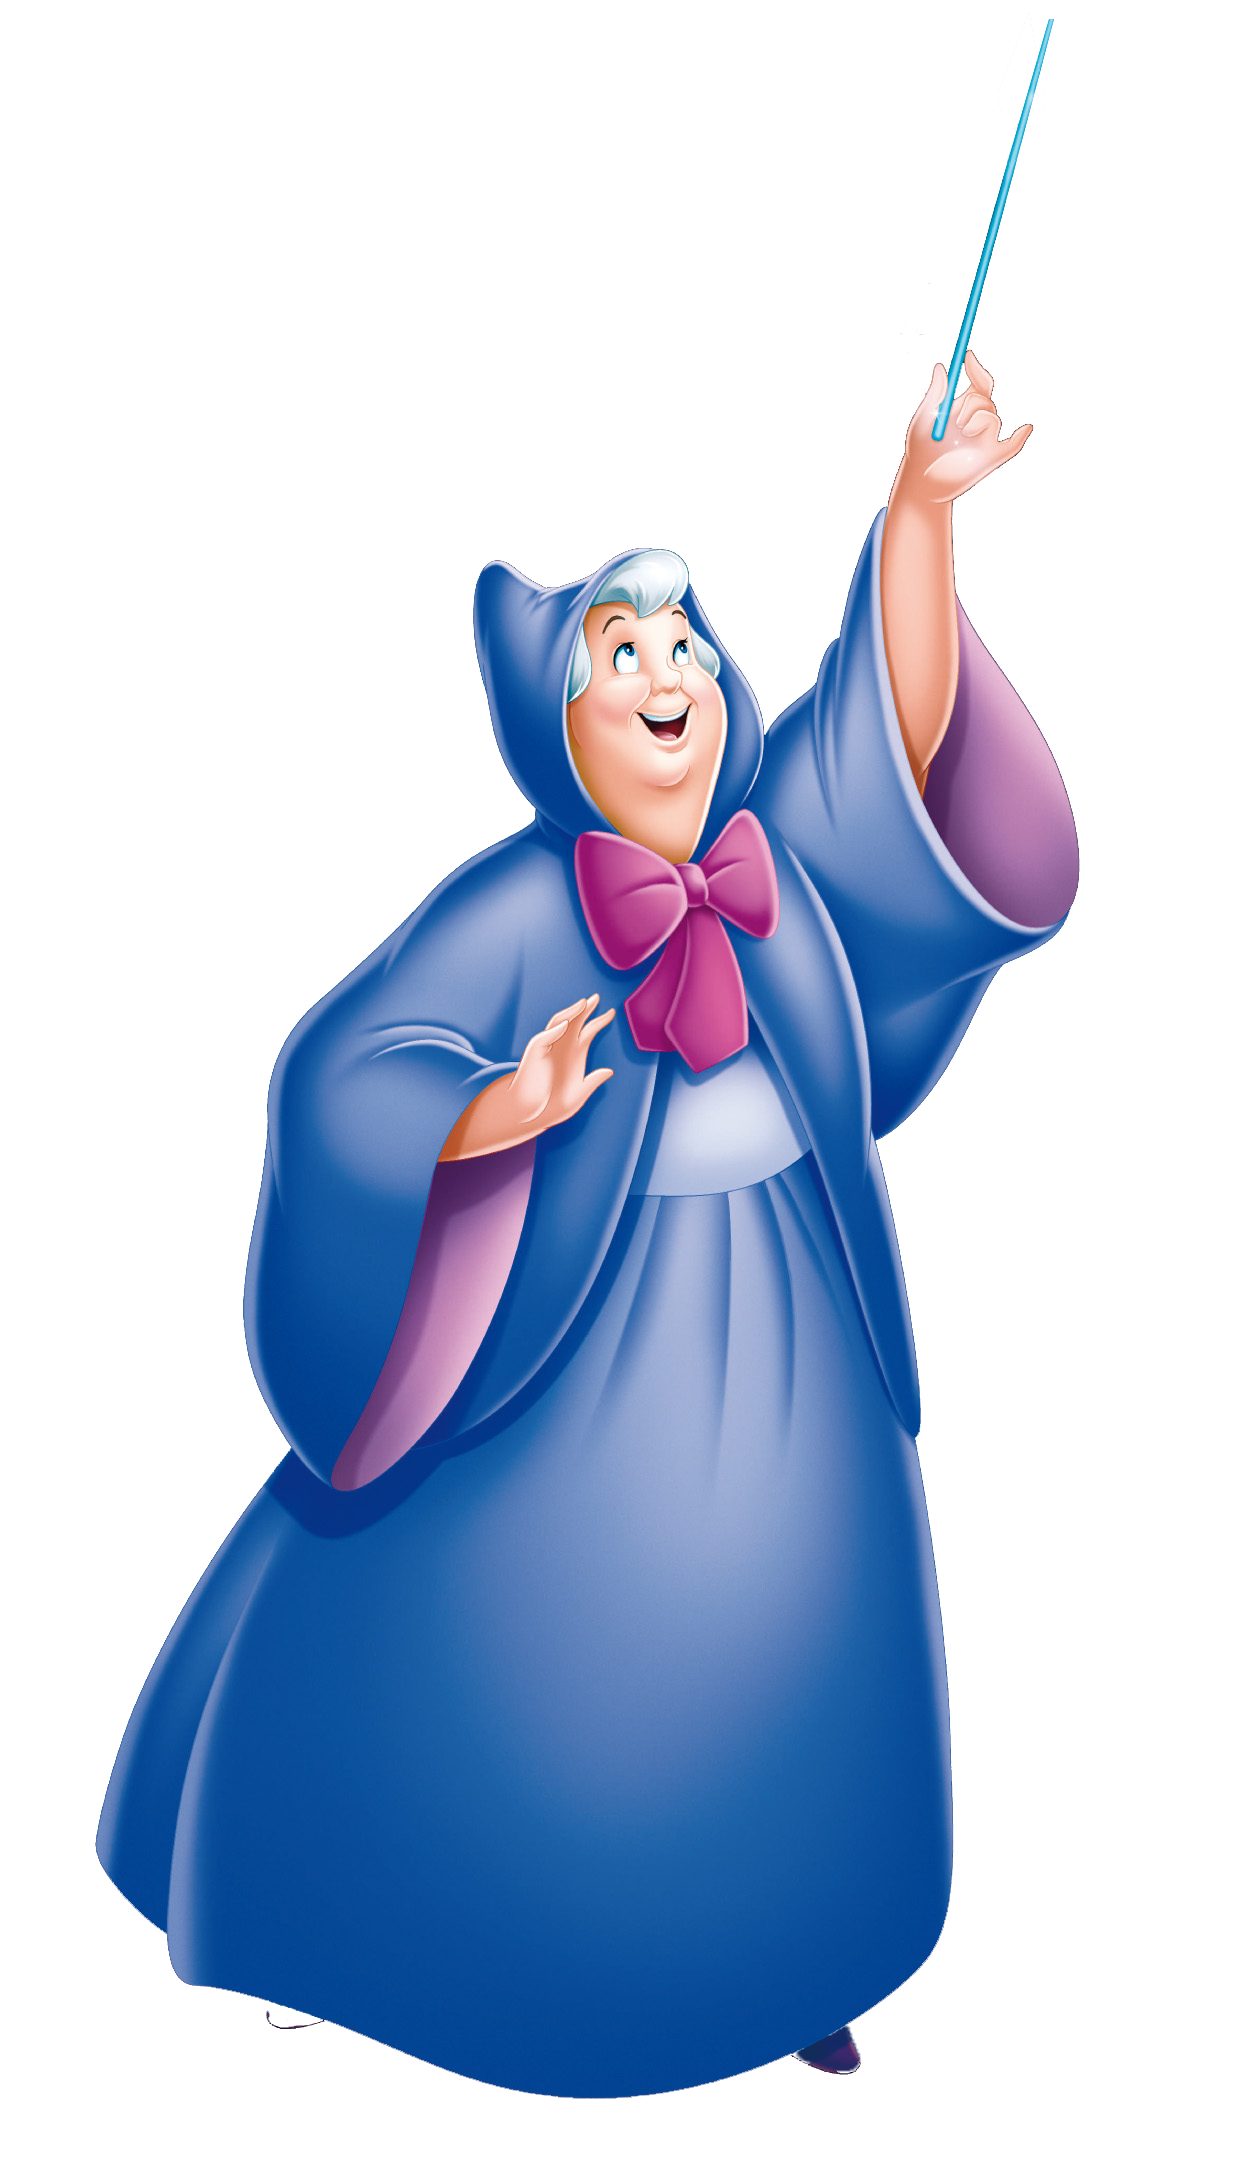 Fairy godmother disney wiki. Witch clipart fairytale